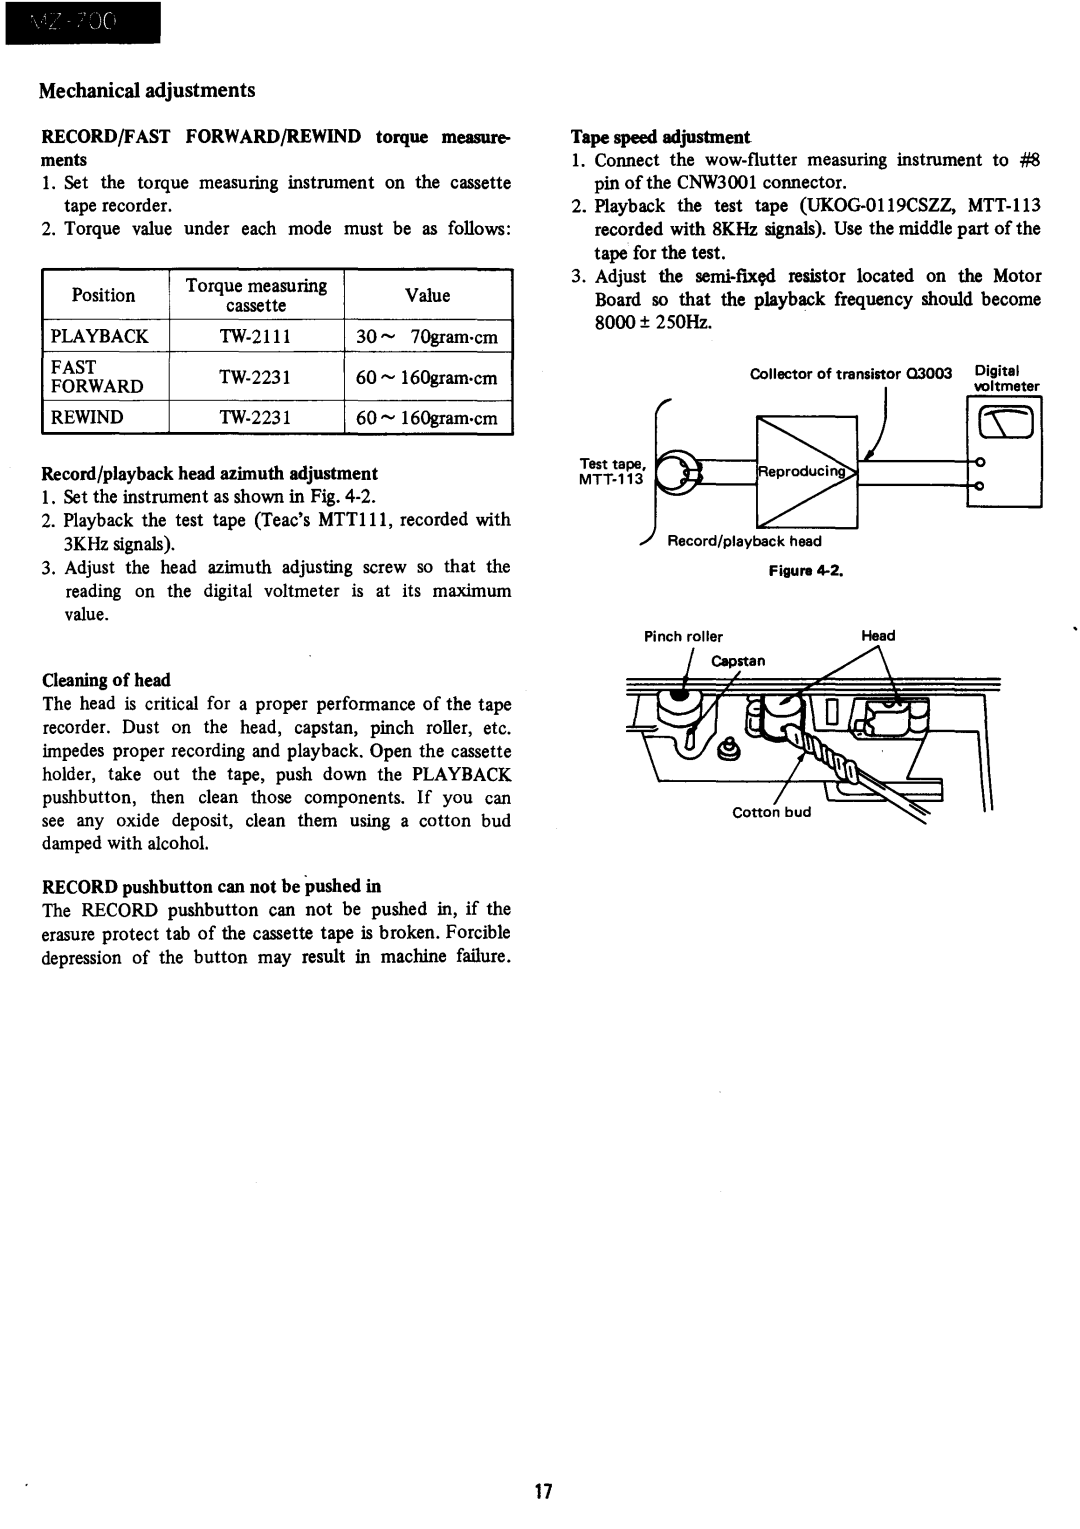 Sharp MZ-700 Mechanical adjustments, Collector of transistor 03003 Digital voltmeter Test tape MTT-113, Pinch roller, Head 